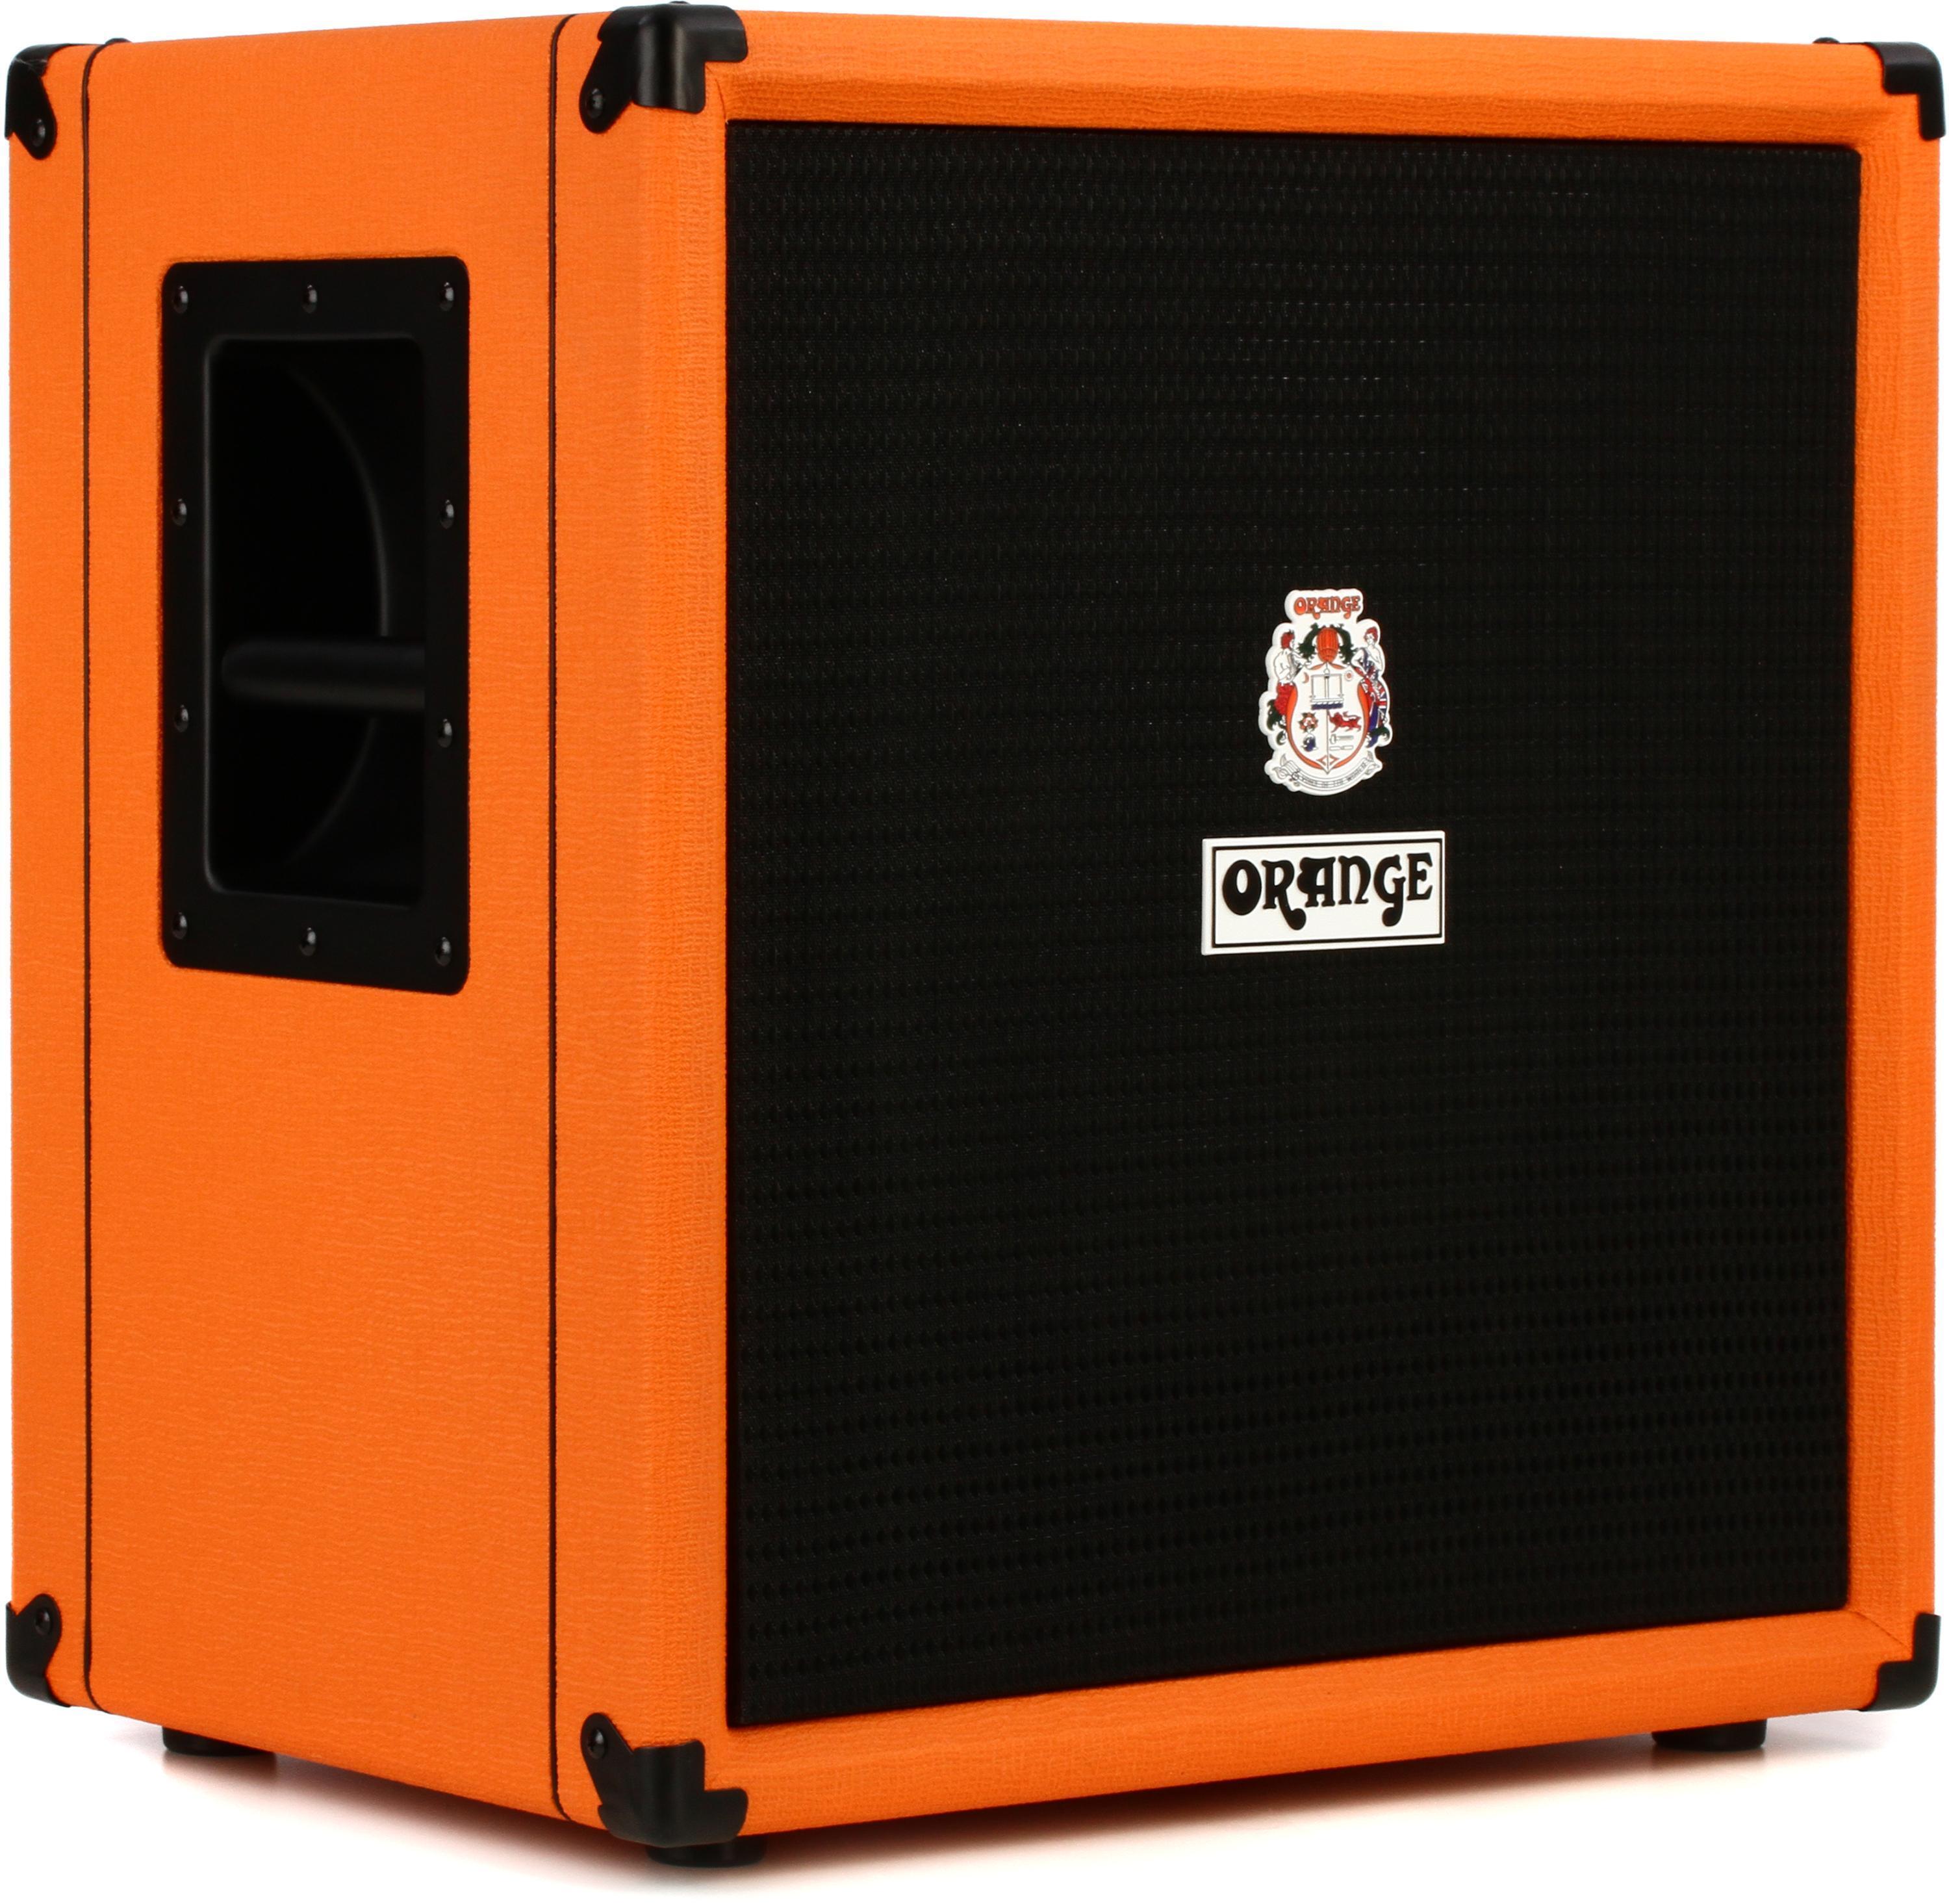 Bundled Item: Orange Crush Bass 100 1x15" 100-watt Bass Combo Amp